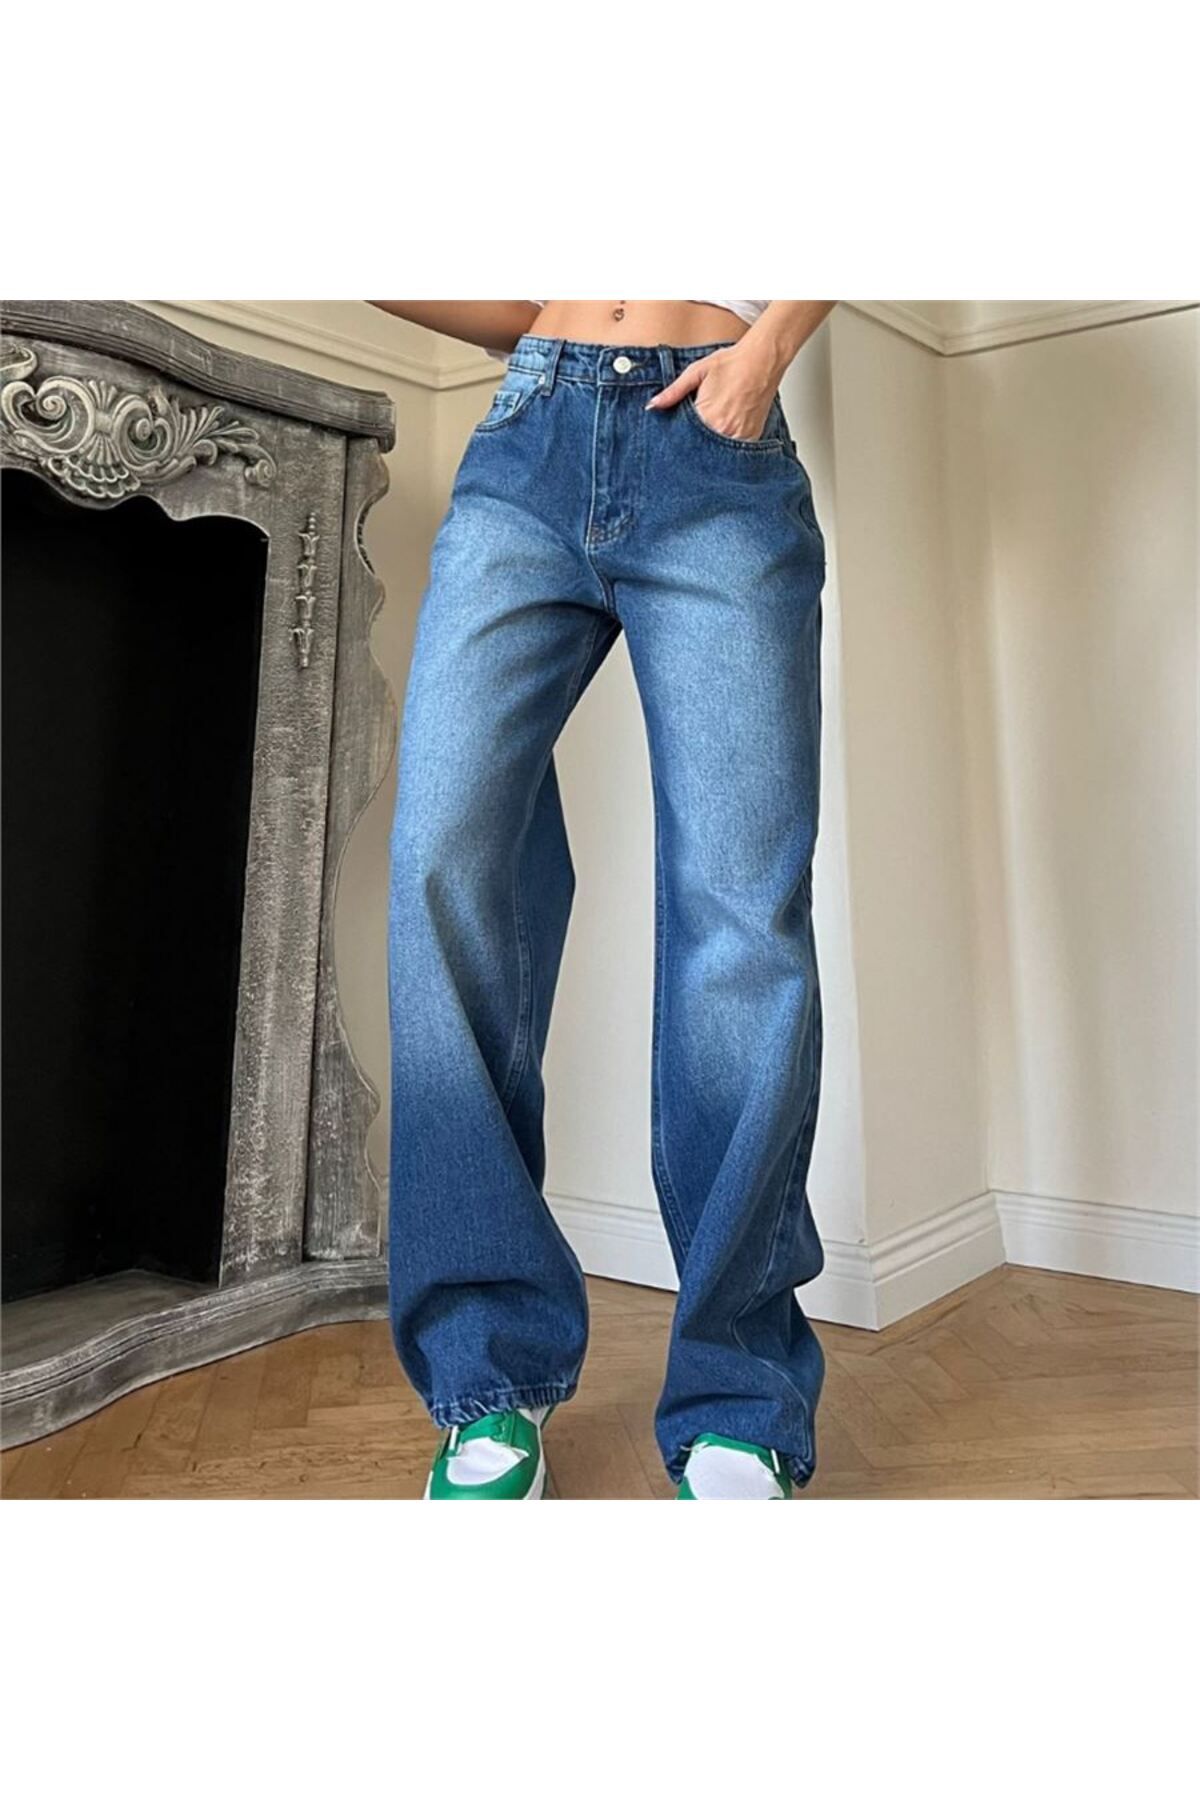 Köstebek Mavi Jeans Vintage Style Kot Pantolon